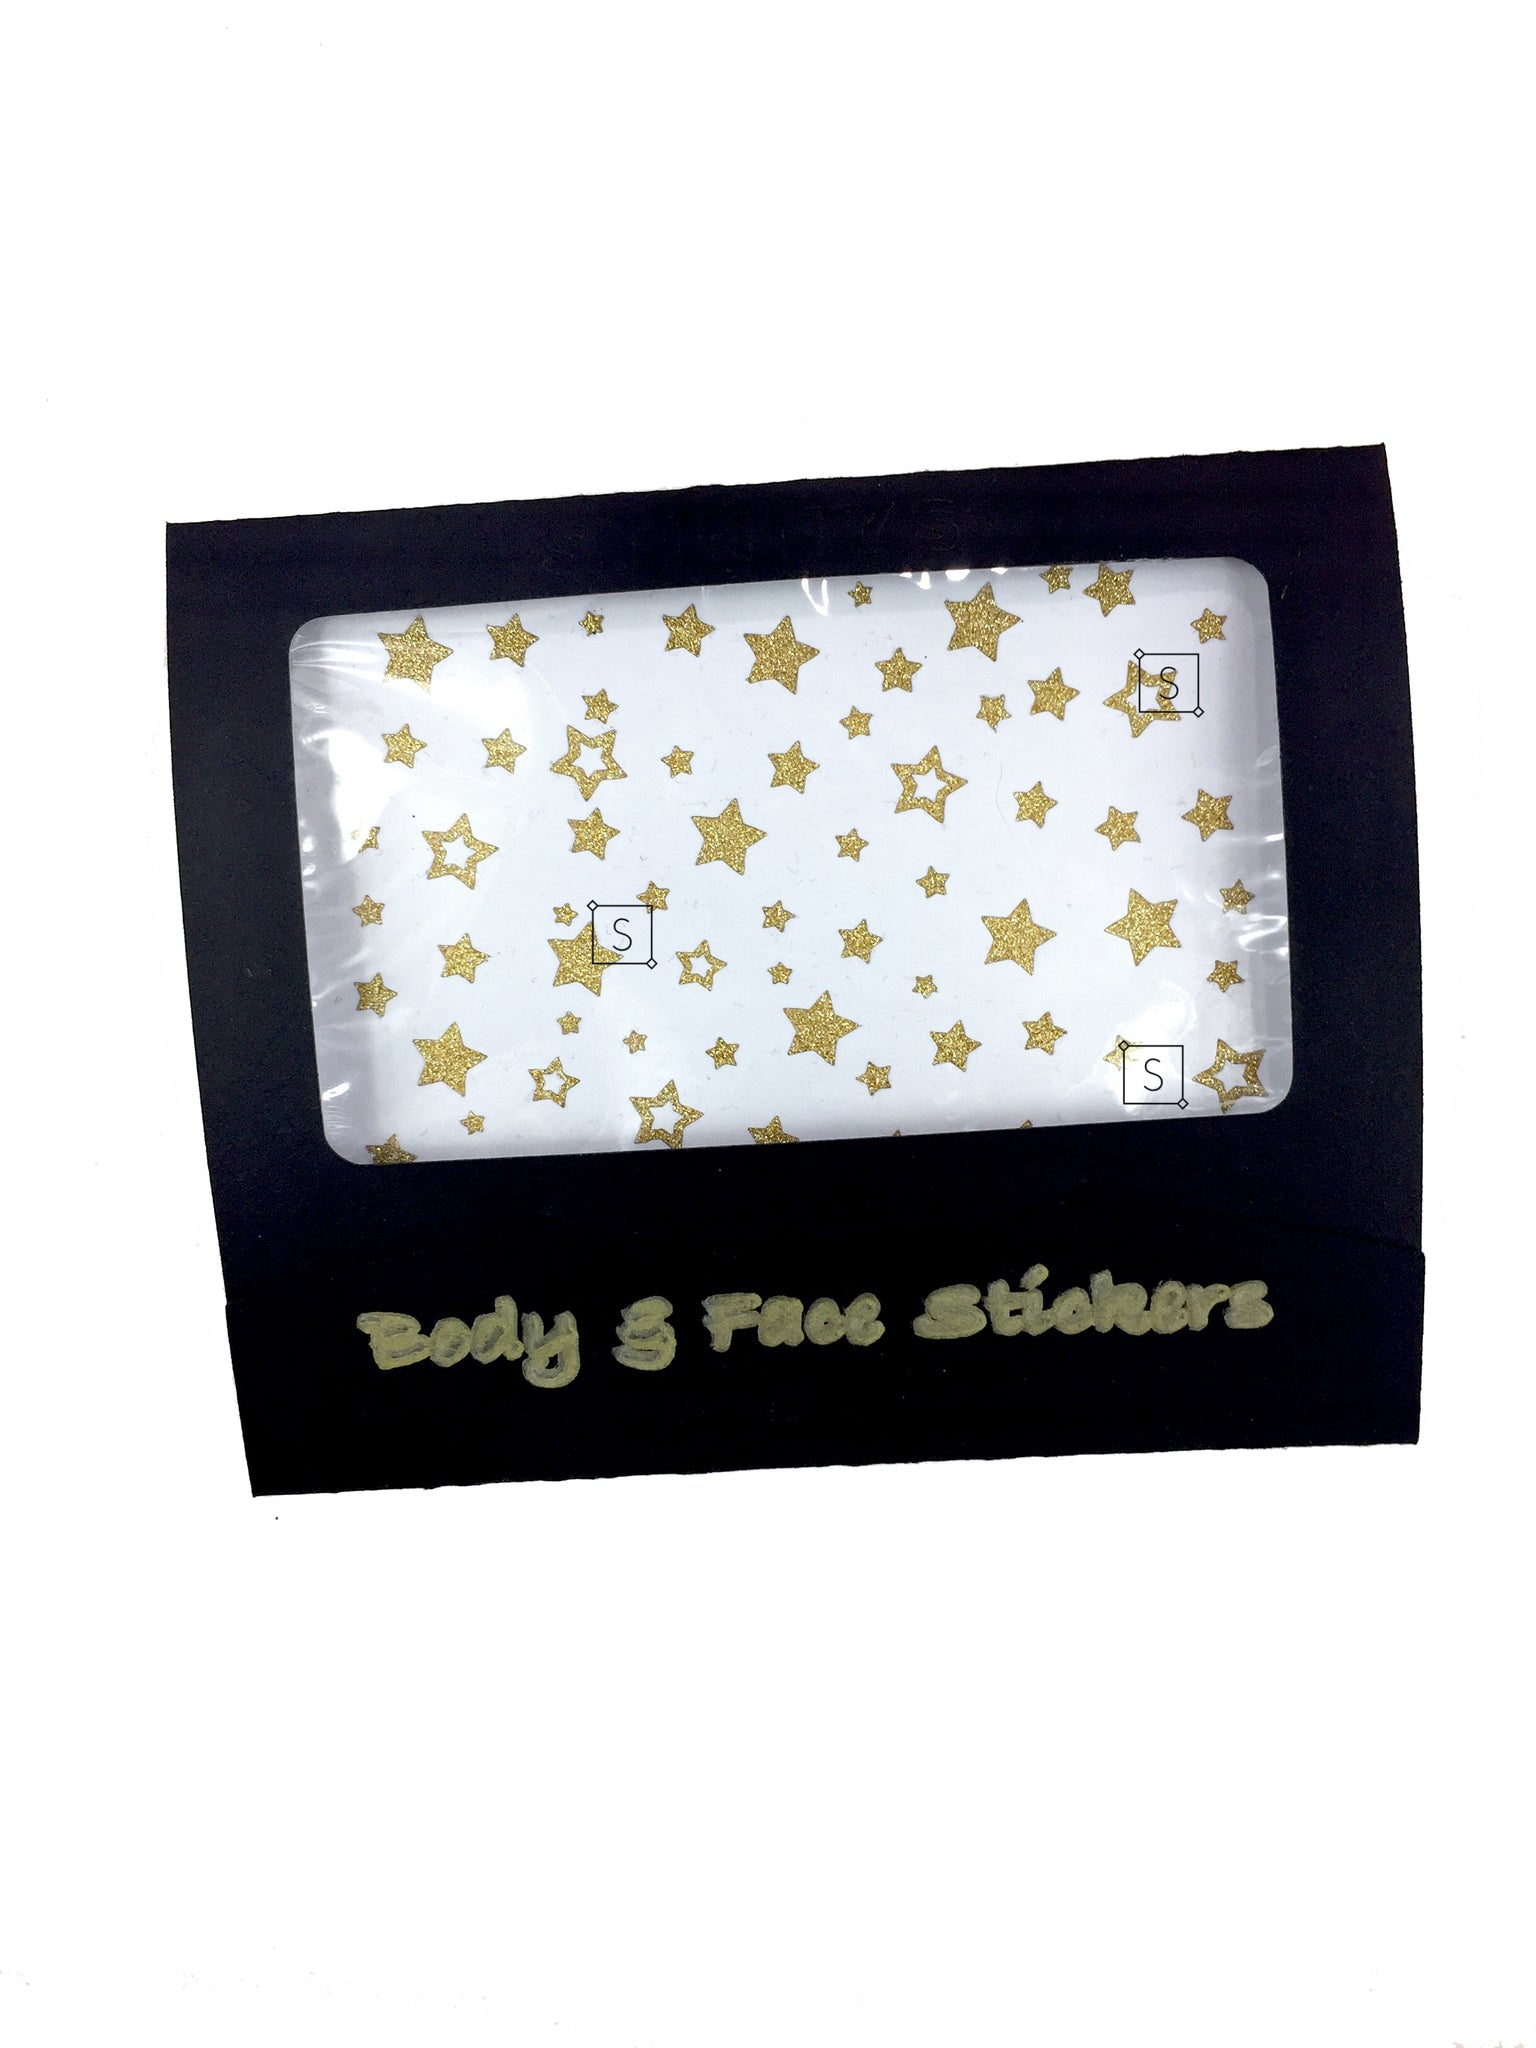 Fallen Stars Body & Face Stickers by Stinnys